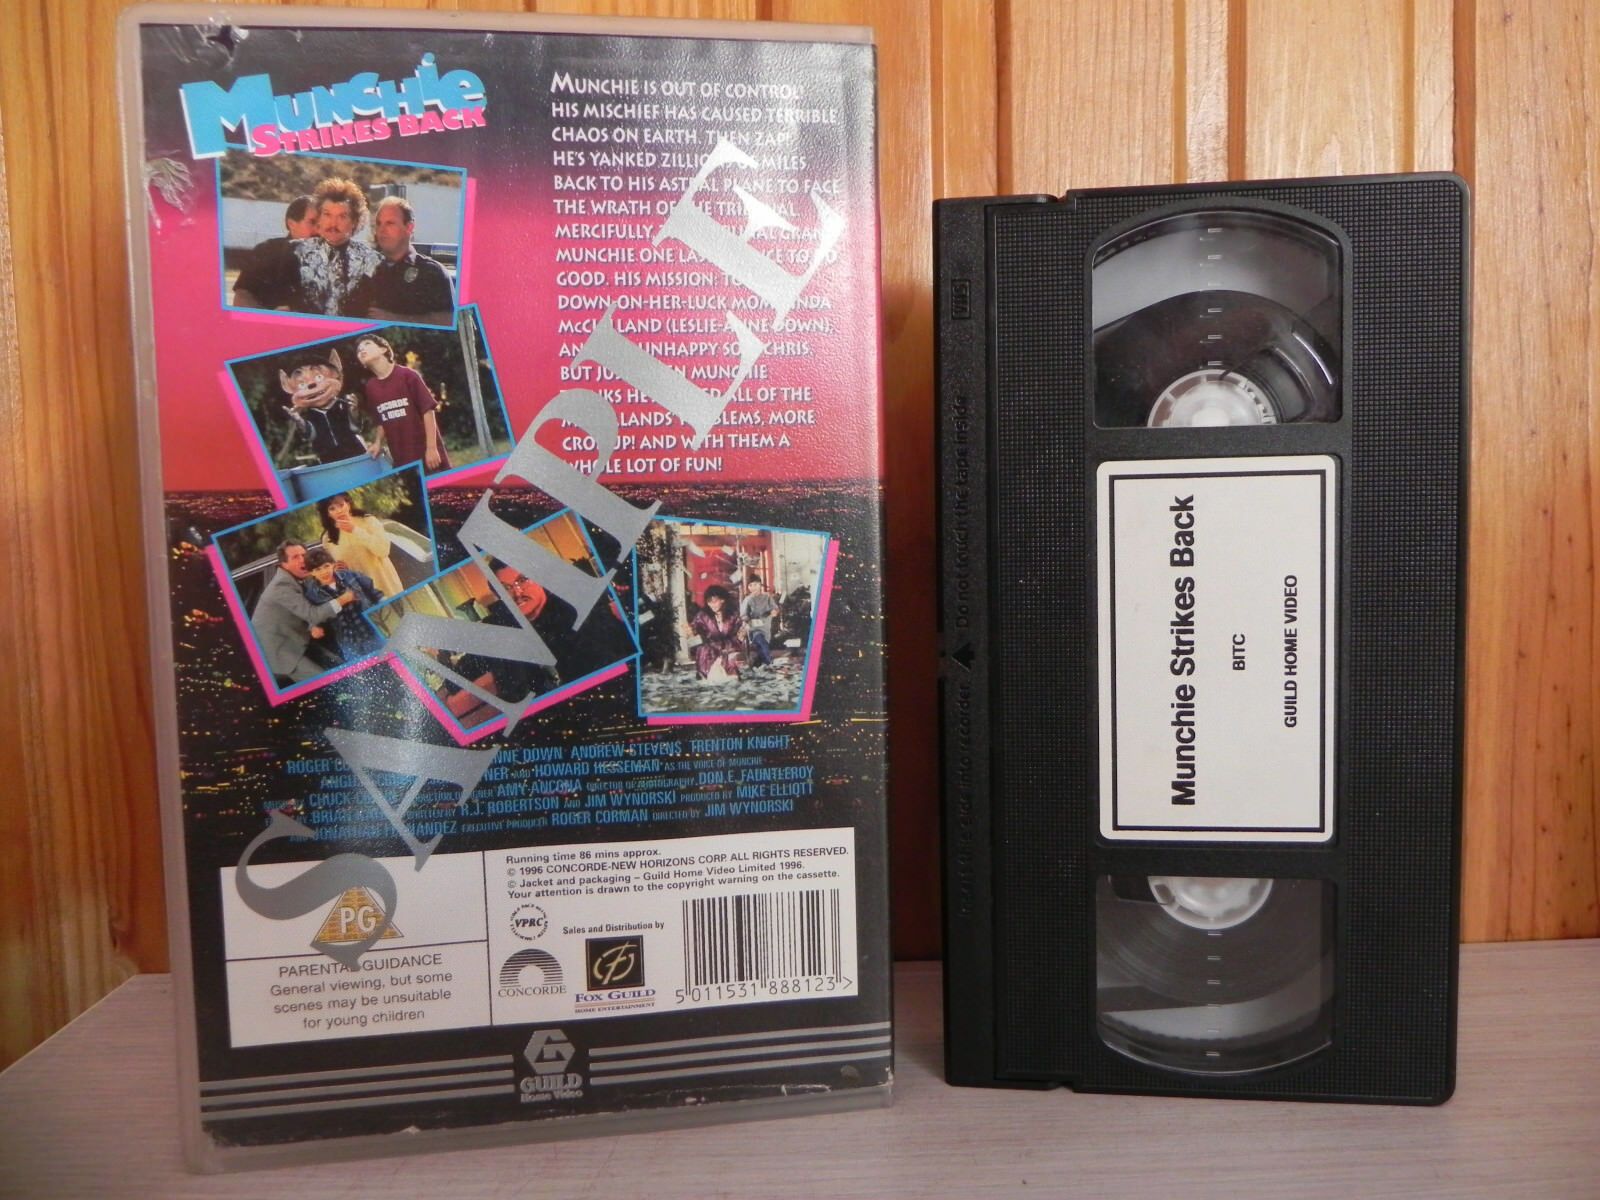 Munchie Strikes Back - Morning Stoner Movie - Sci-Fi Comedy - Sample Copy - VHS-